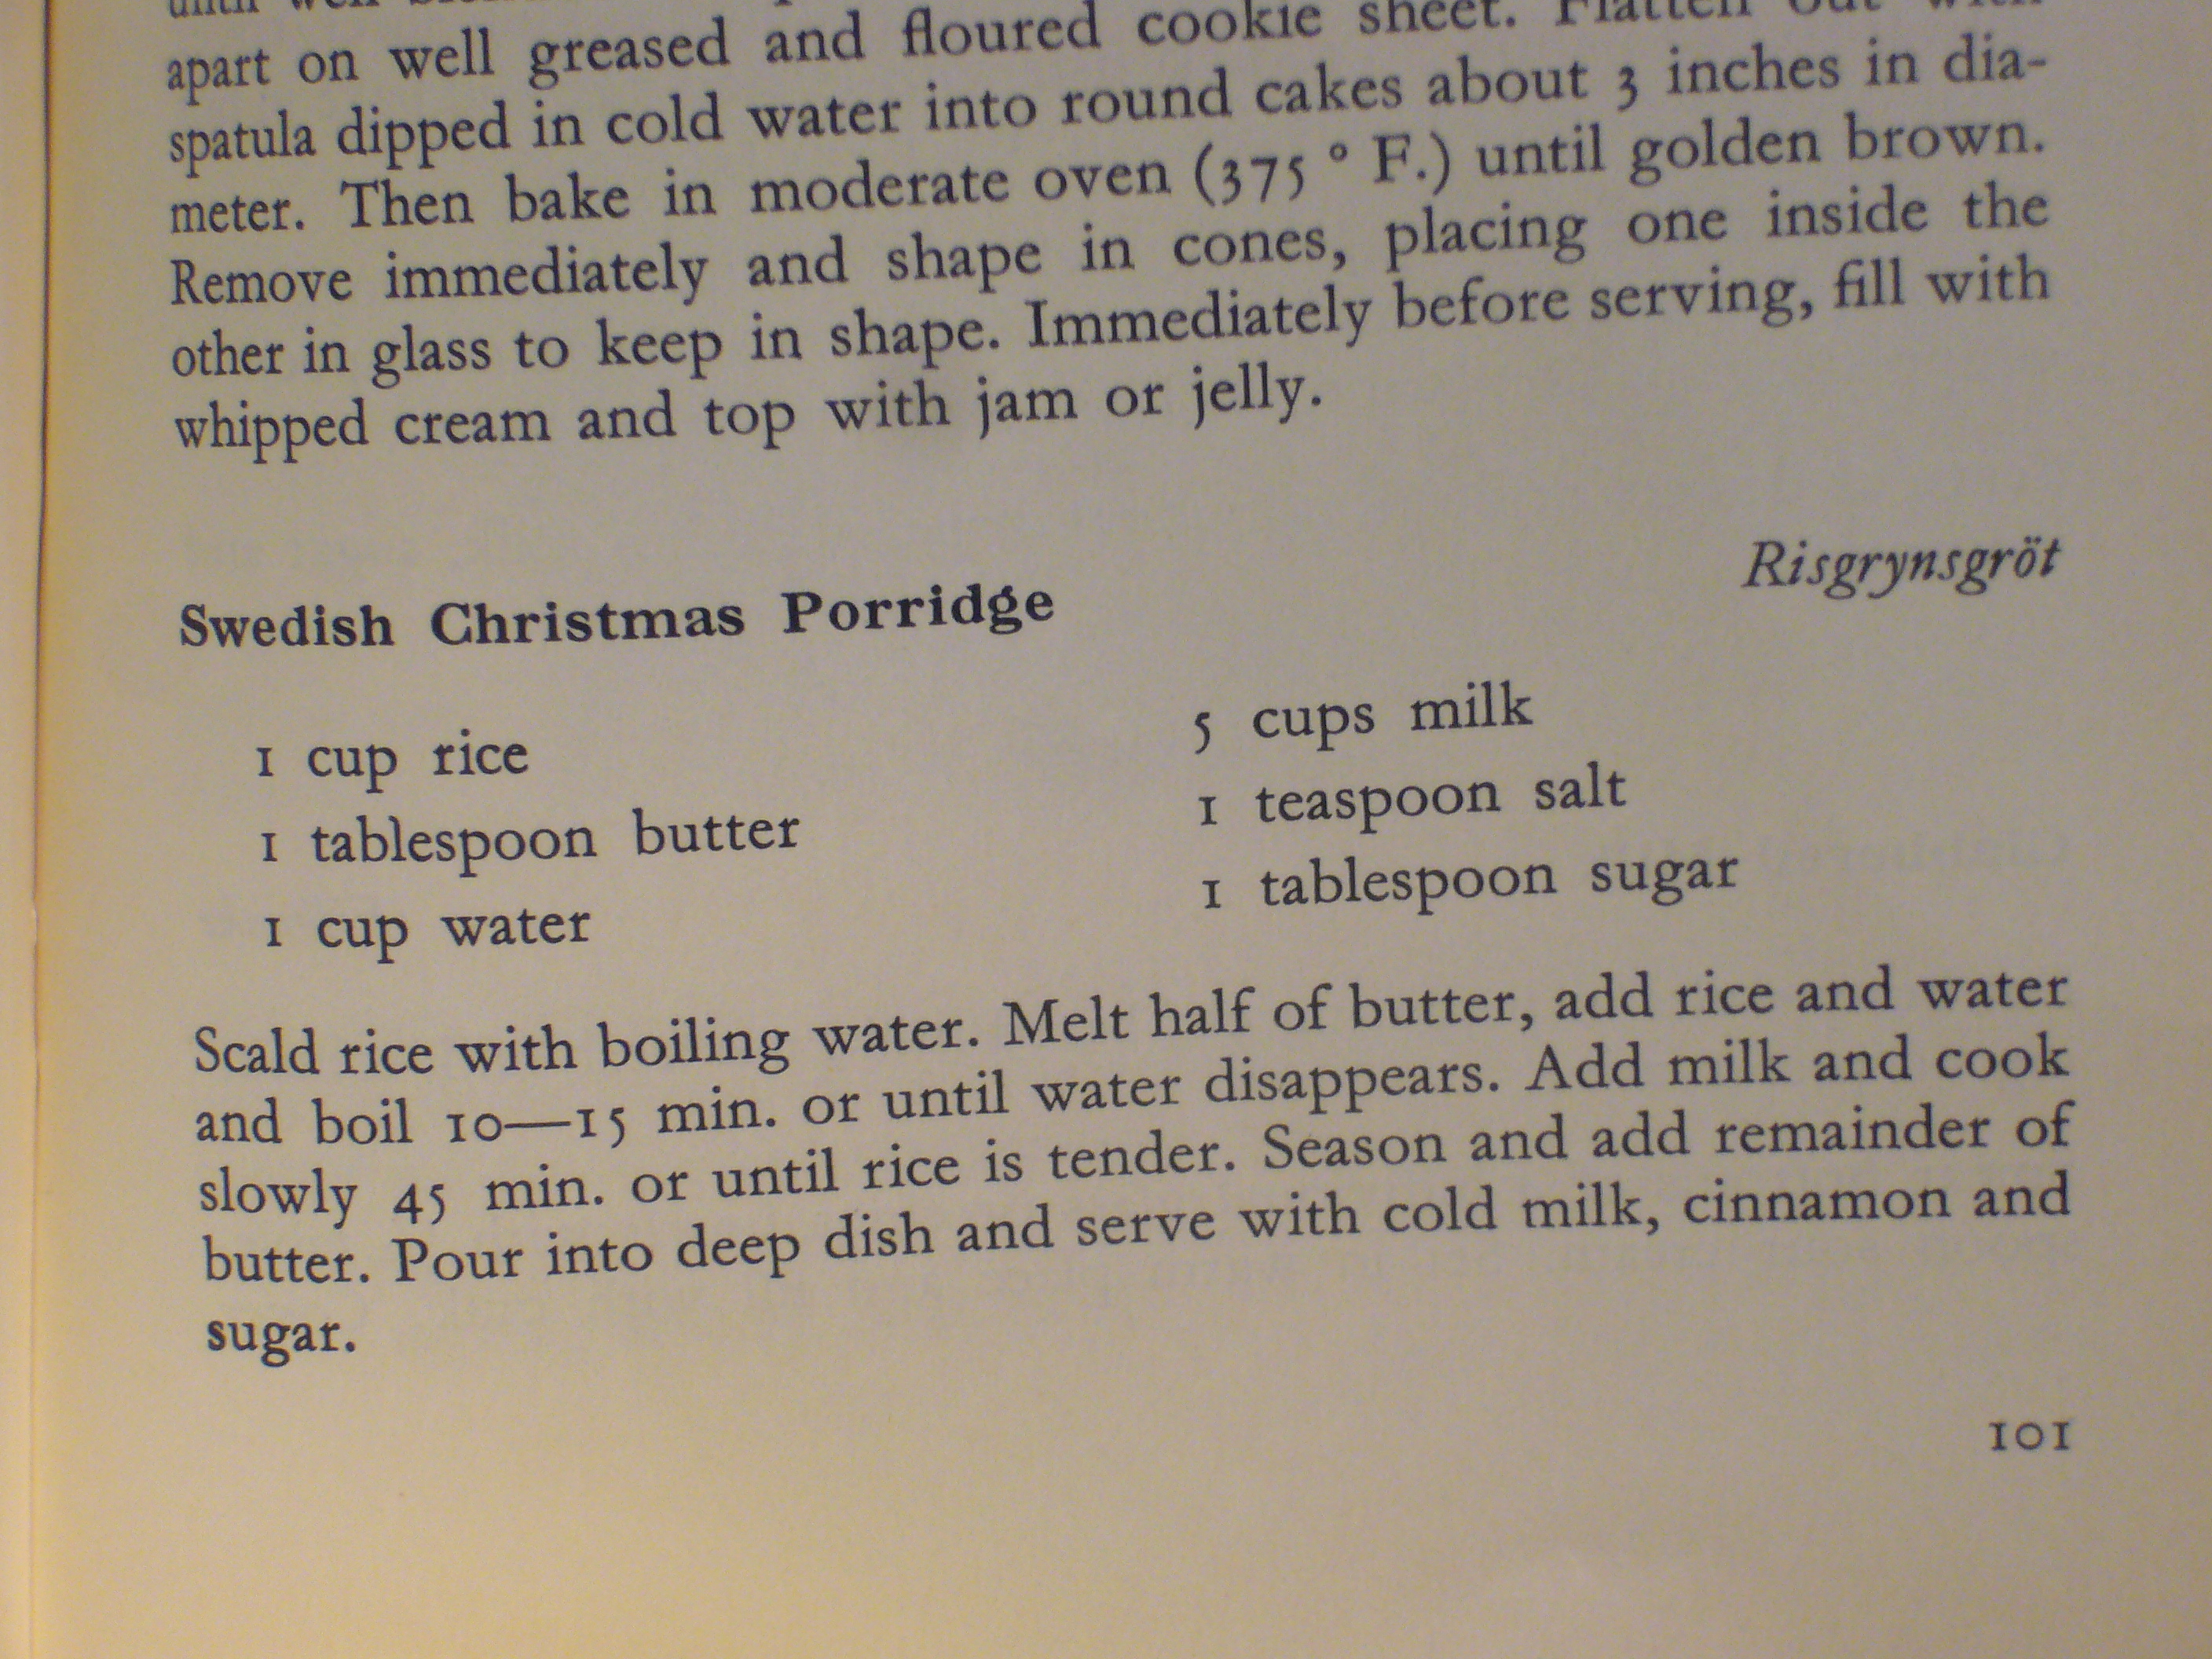 Swedish Christmas Porridge recipe on Food52.com